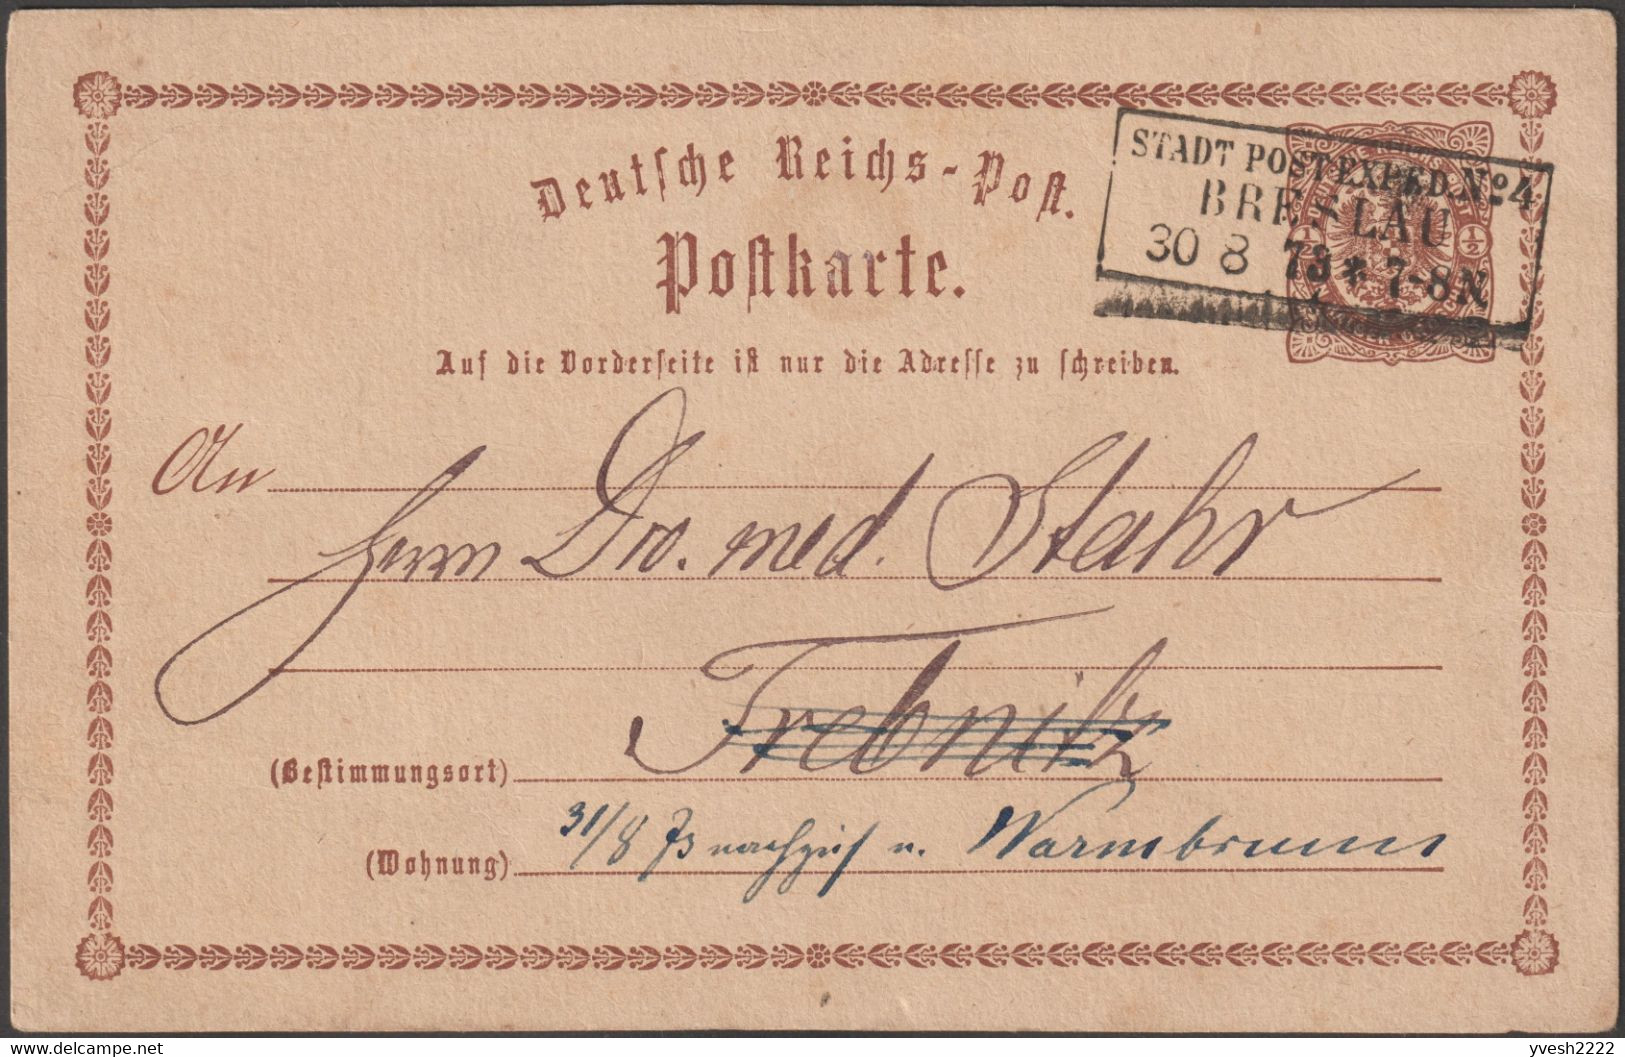 Pologne / Allemagne 1873. Entier Postal Oblitéré Stadt Post Exped. N° 4 - Breslau 30 8 73  7-8 N  Wrocław - Machines à Affranchir (EMA)